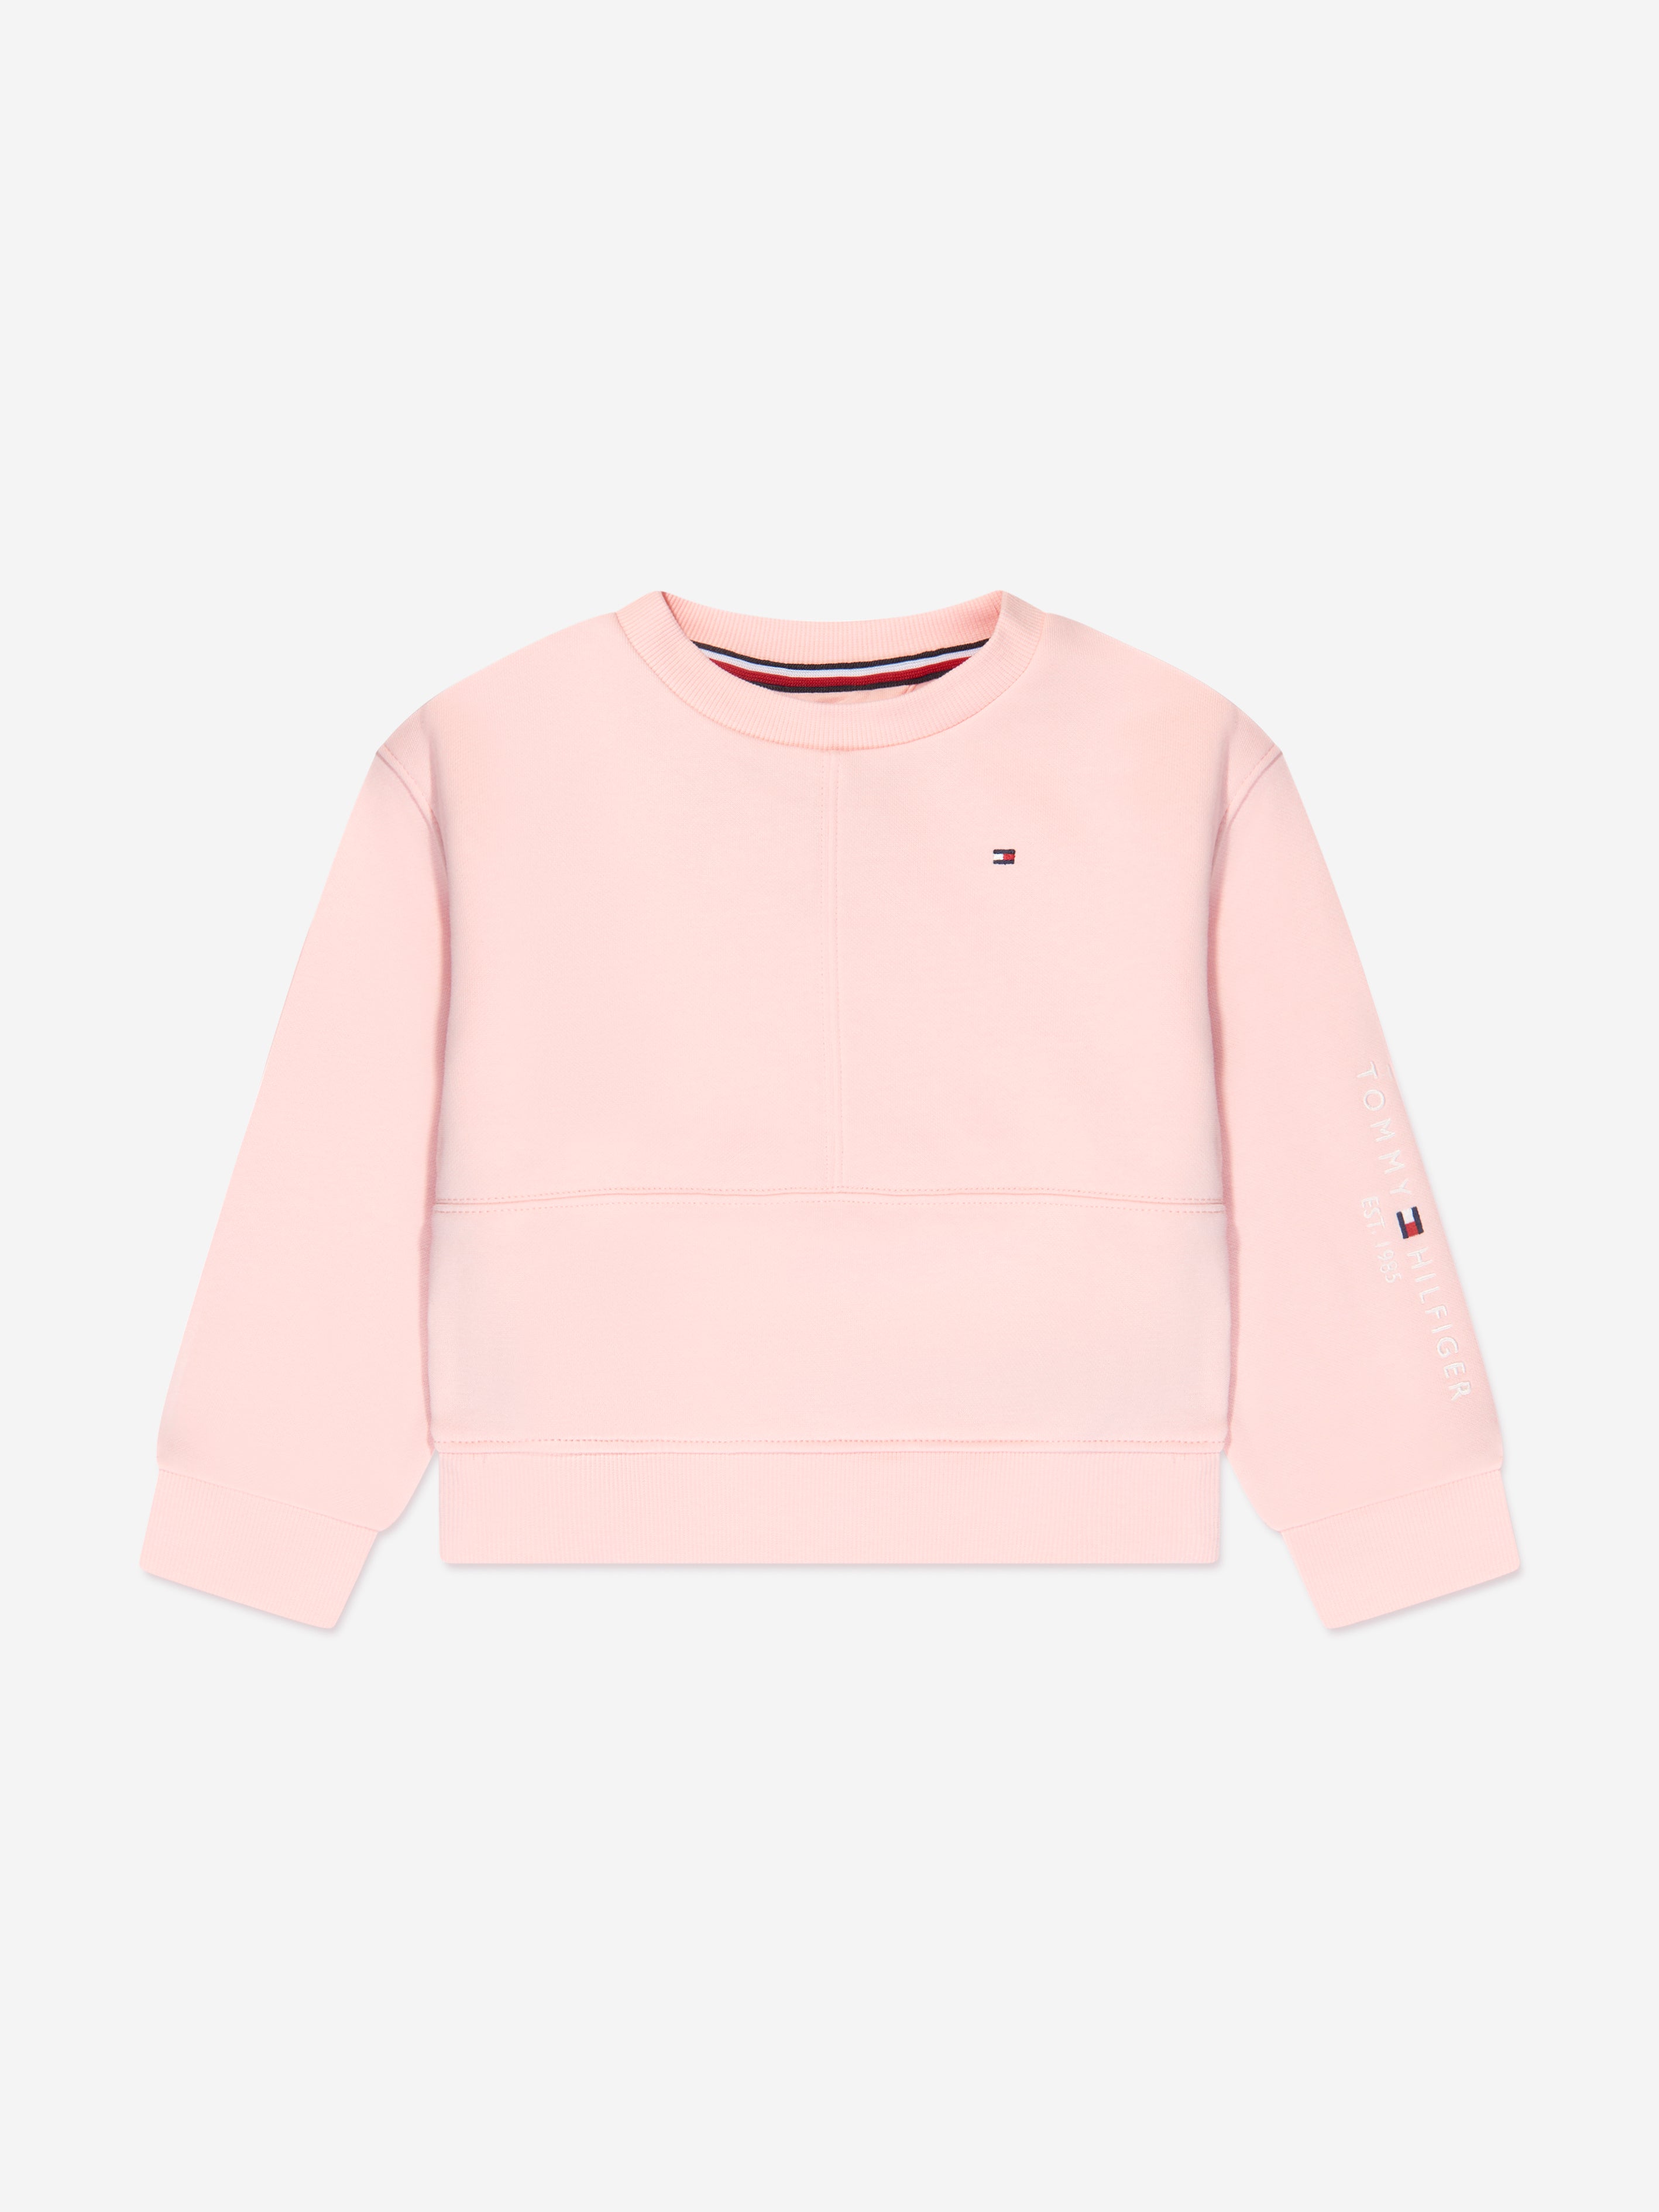 Sweatshirt Childsplay in Girls Pink Essential | Clothing